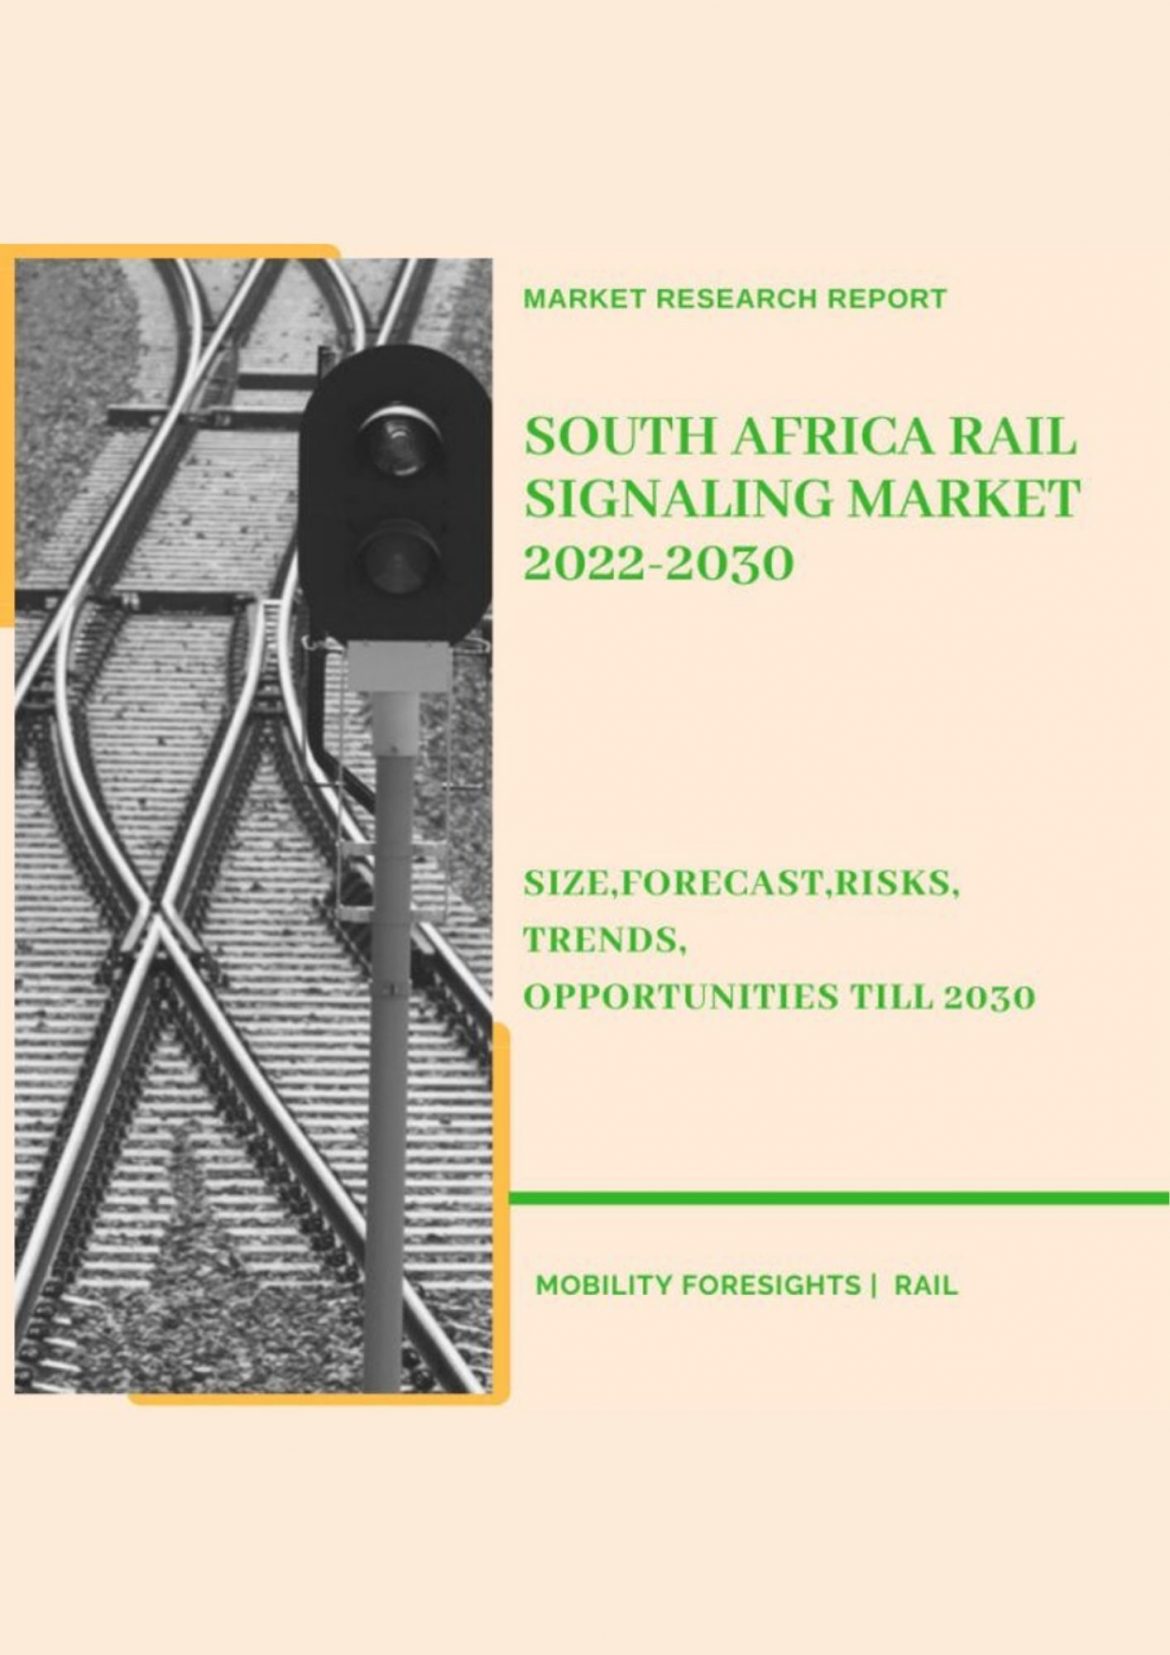 South Africa Rail Signaling Market 2022-2030